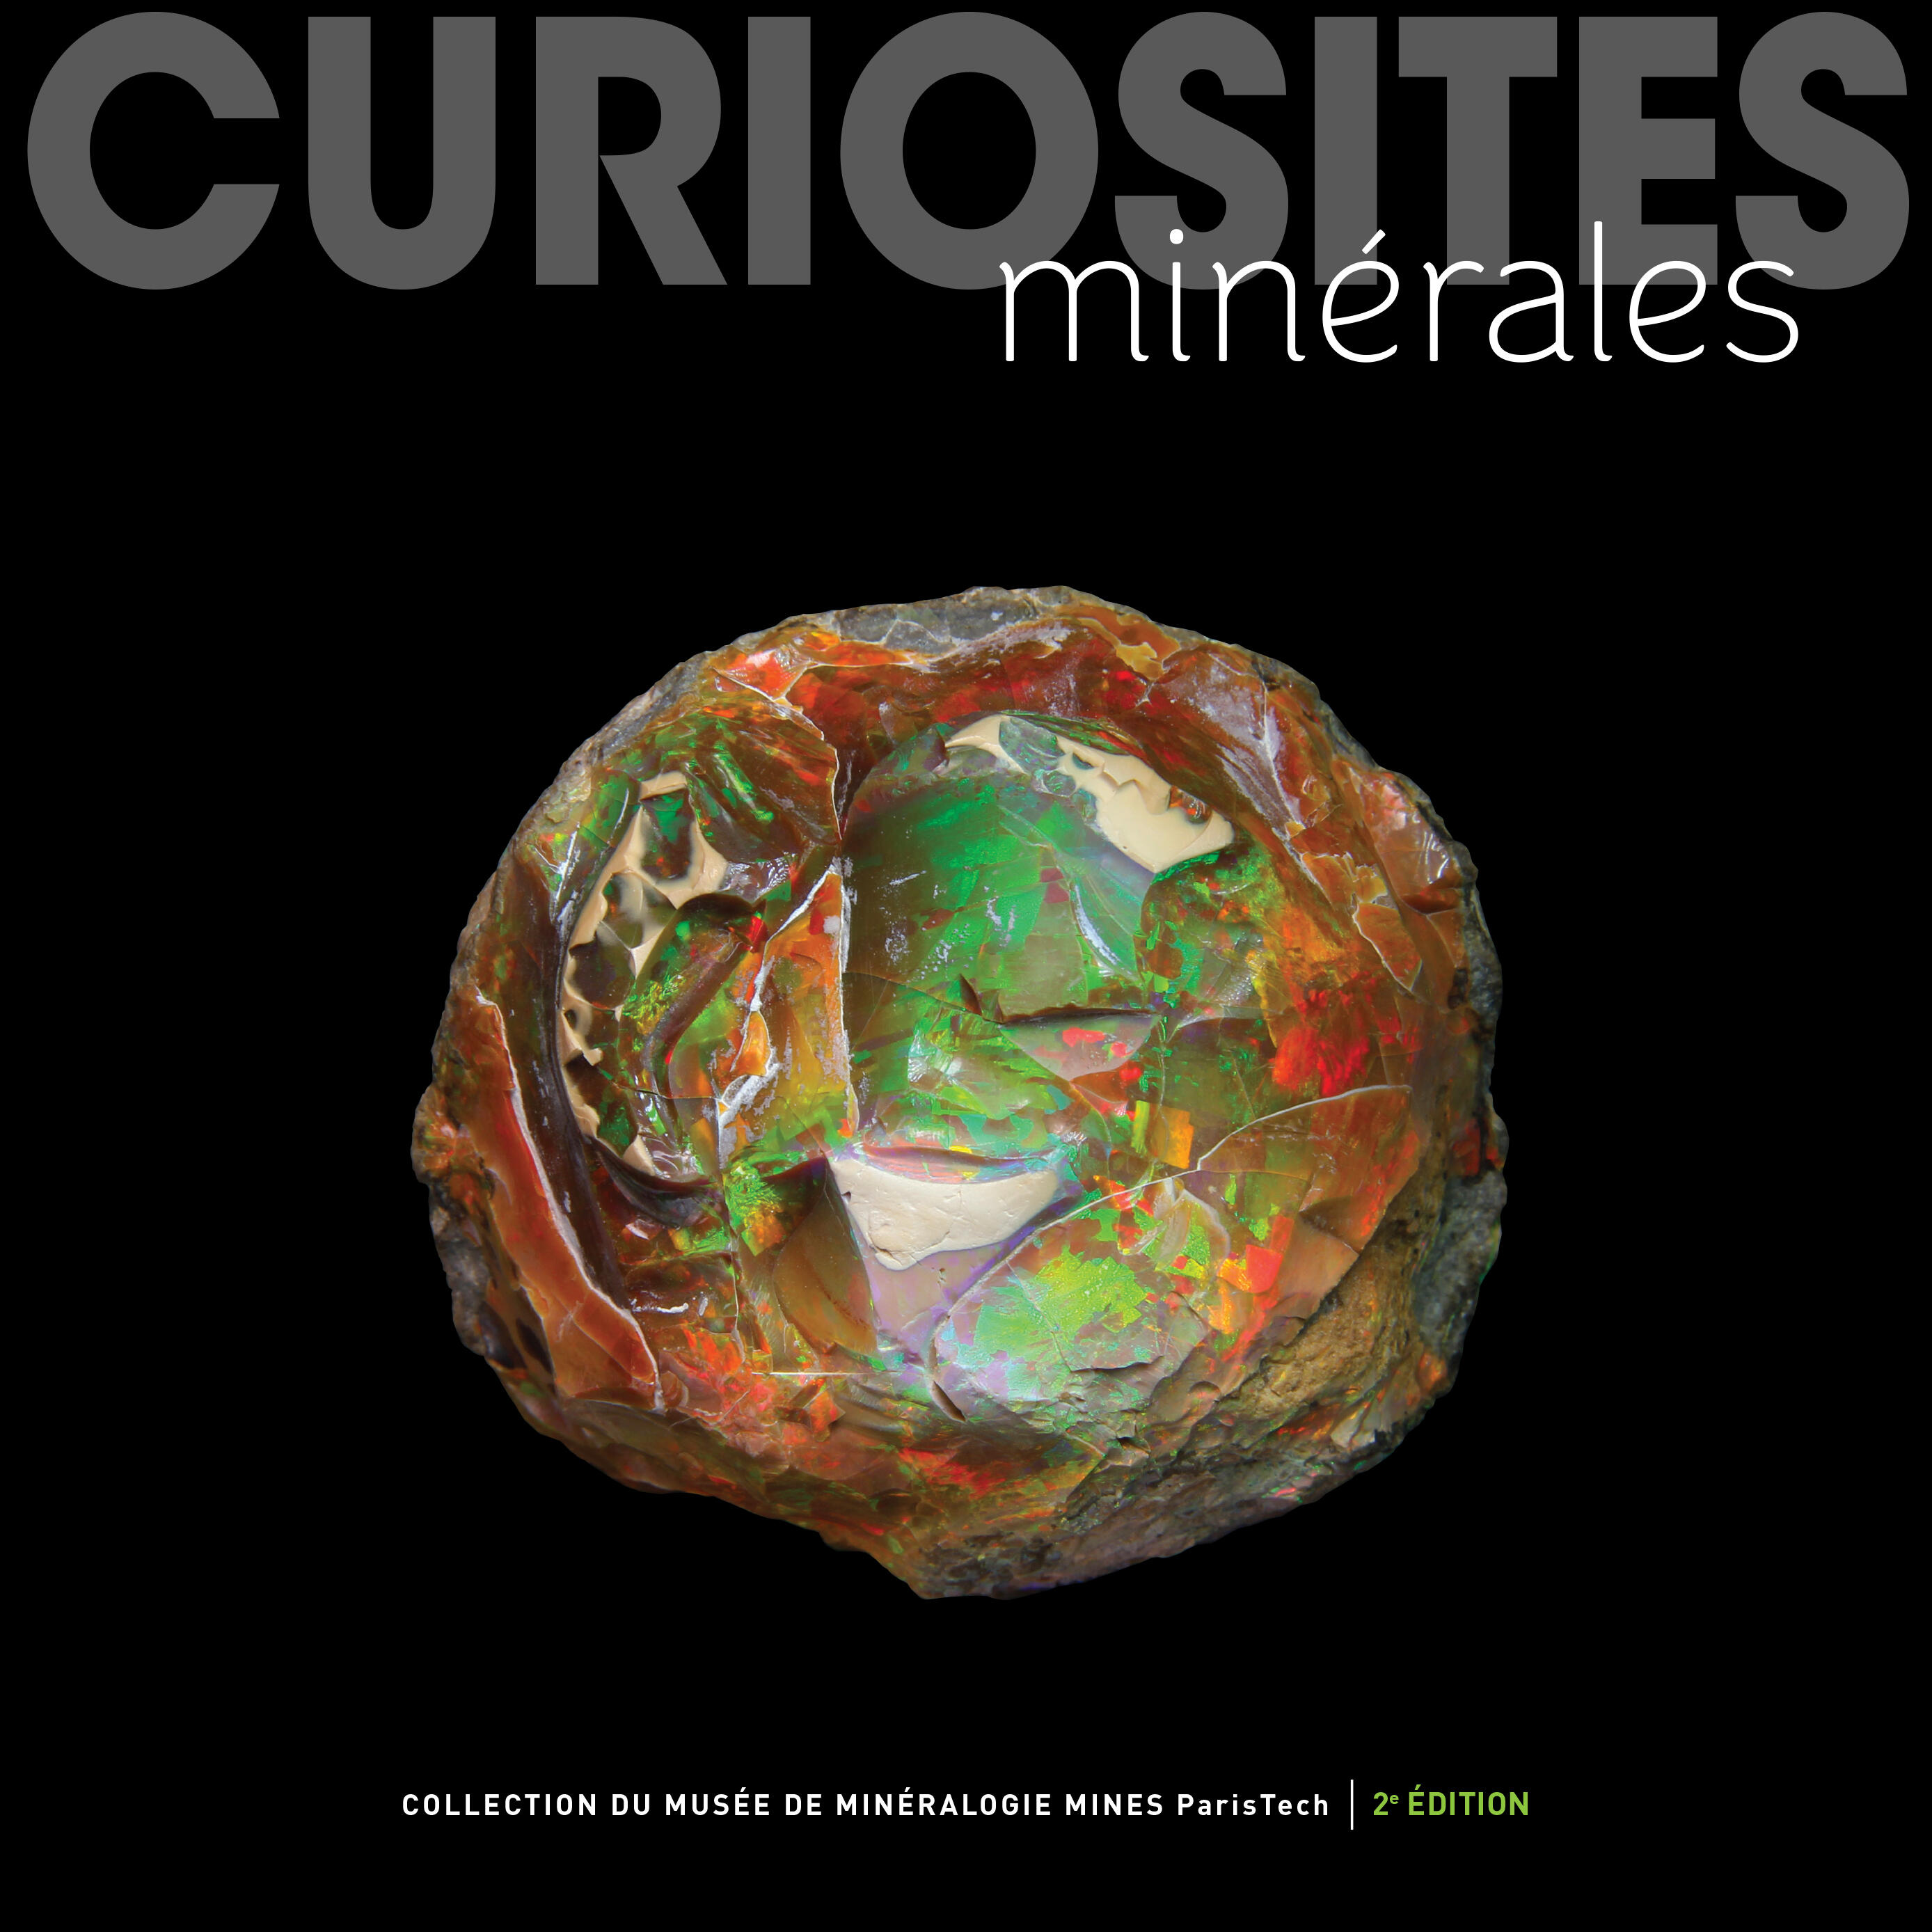 Mineral Curiosities: